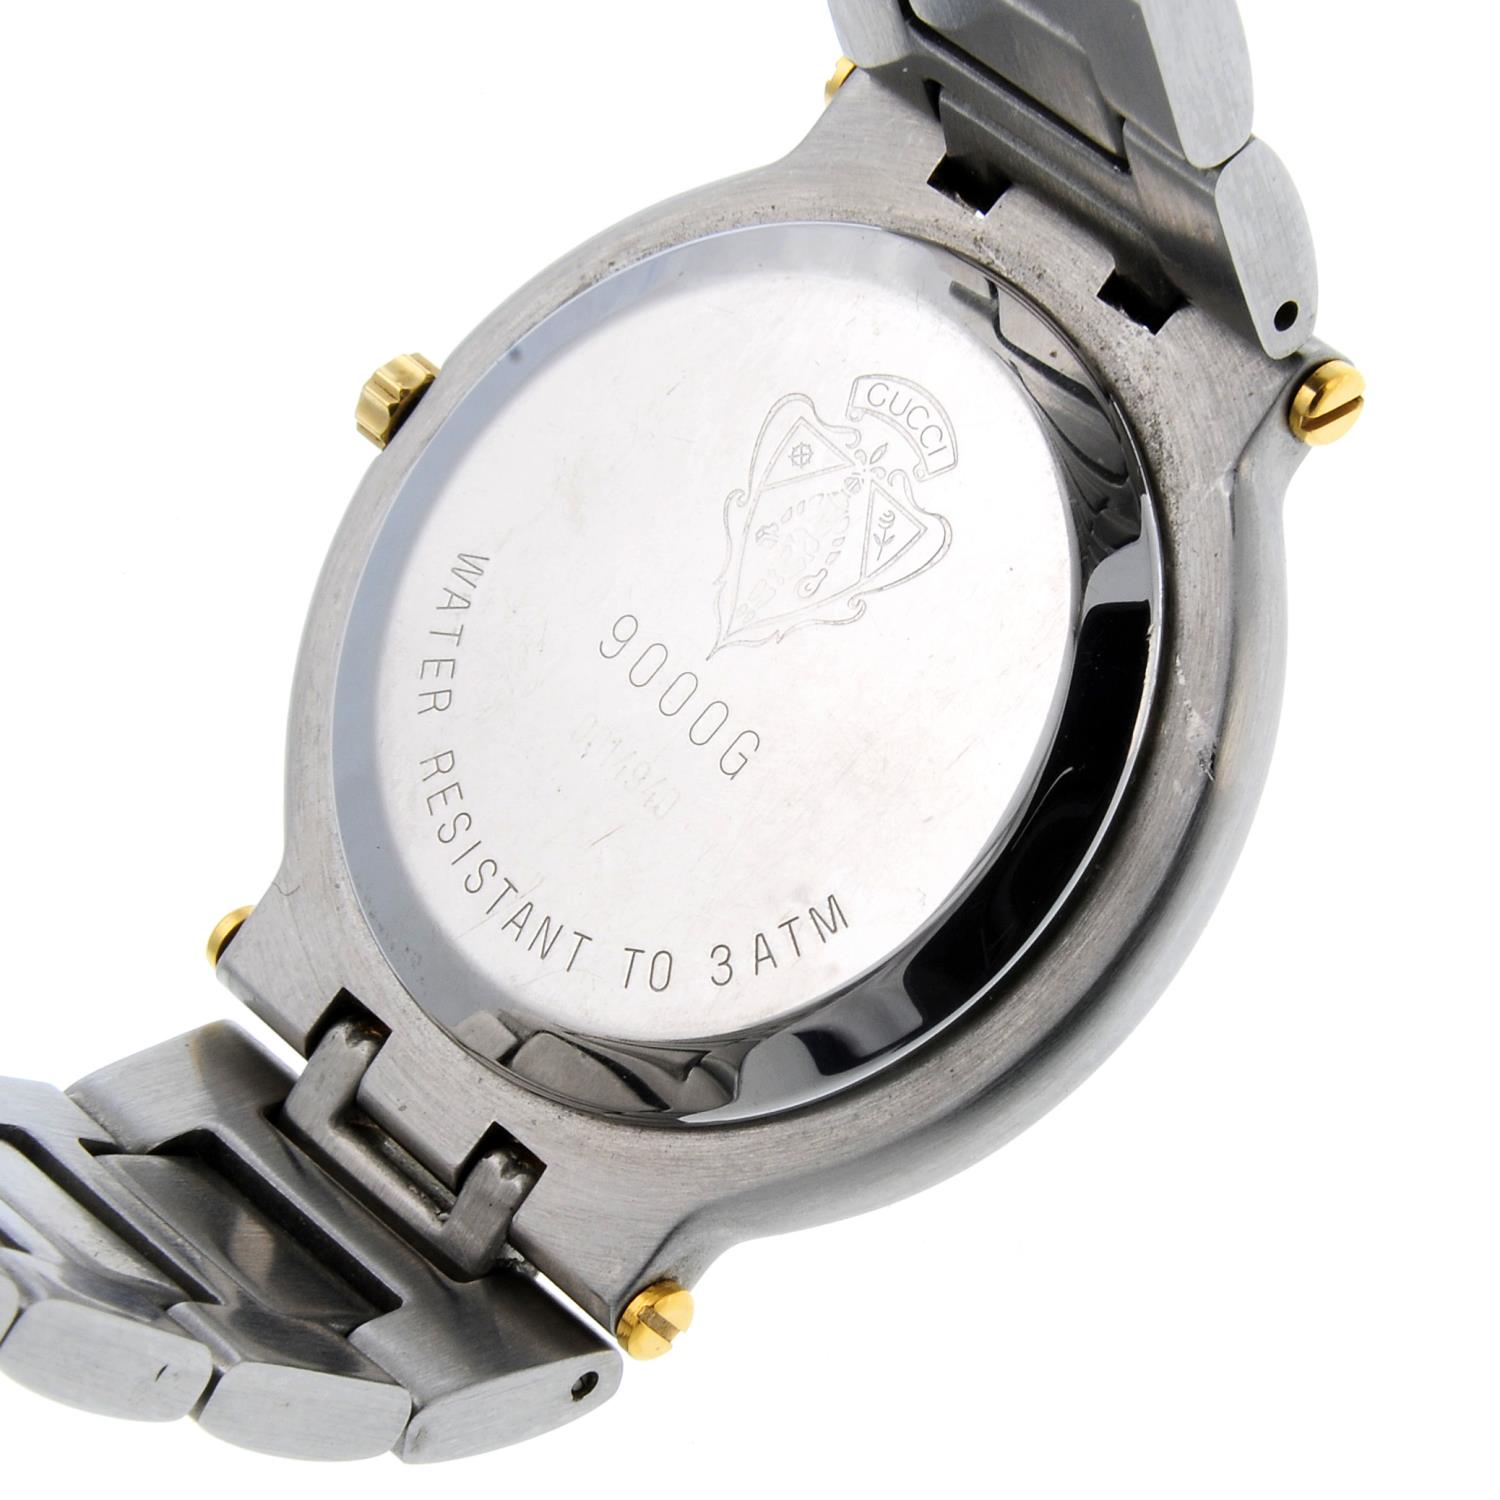 GUCCI - a mid-size 9000G bracelet watch. - Image 4 of 4